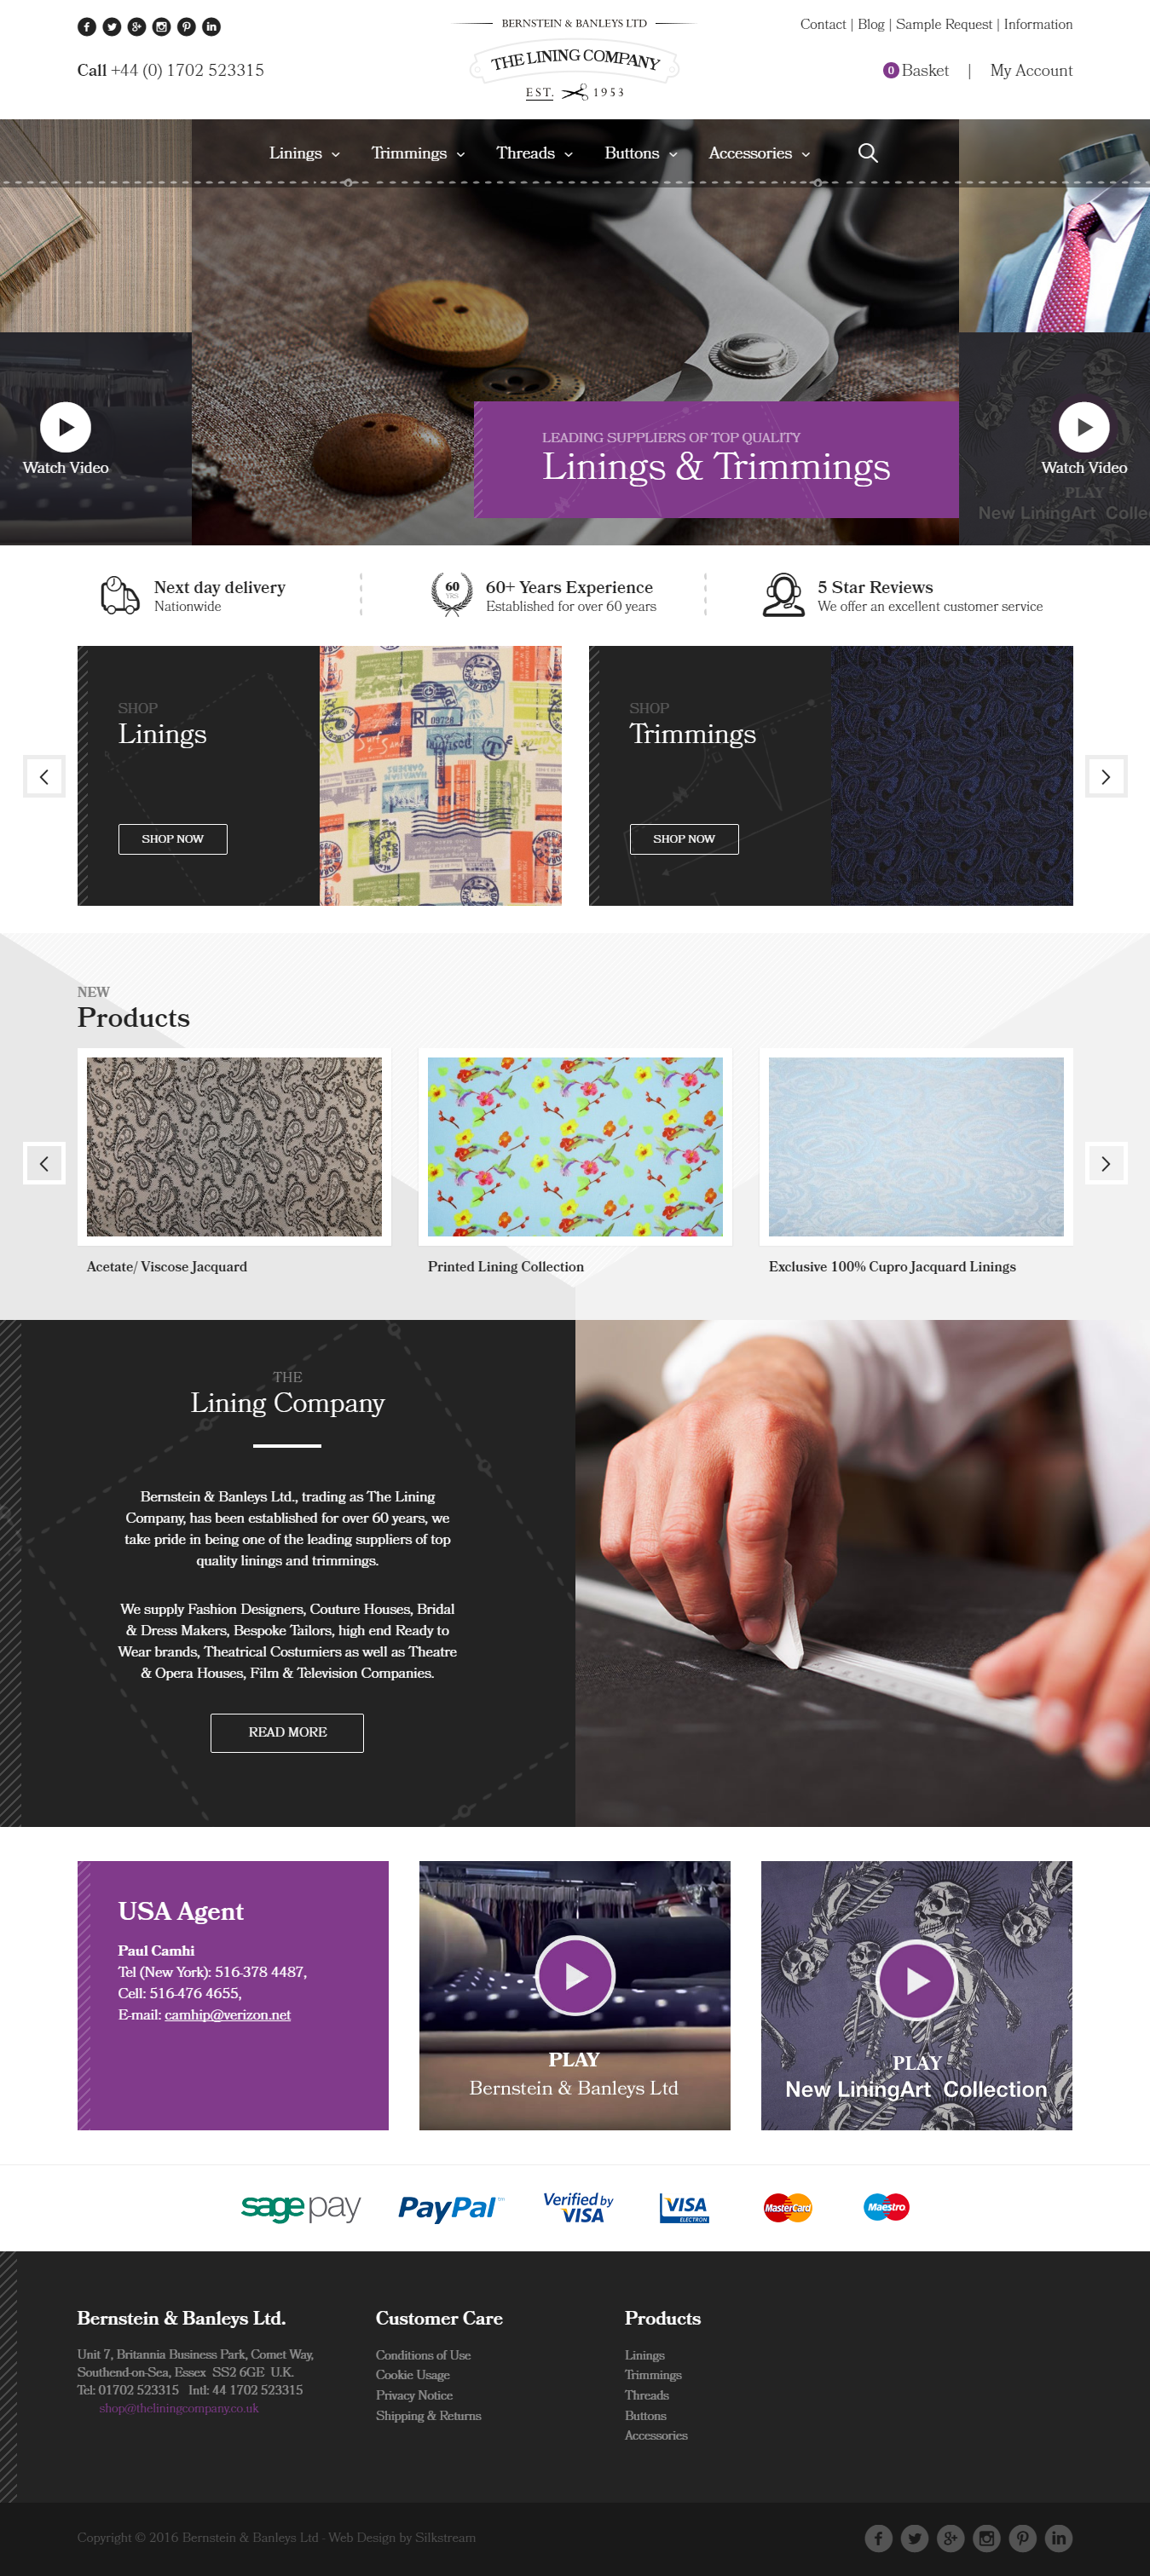 The Lining Company new web design